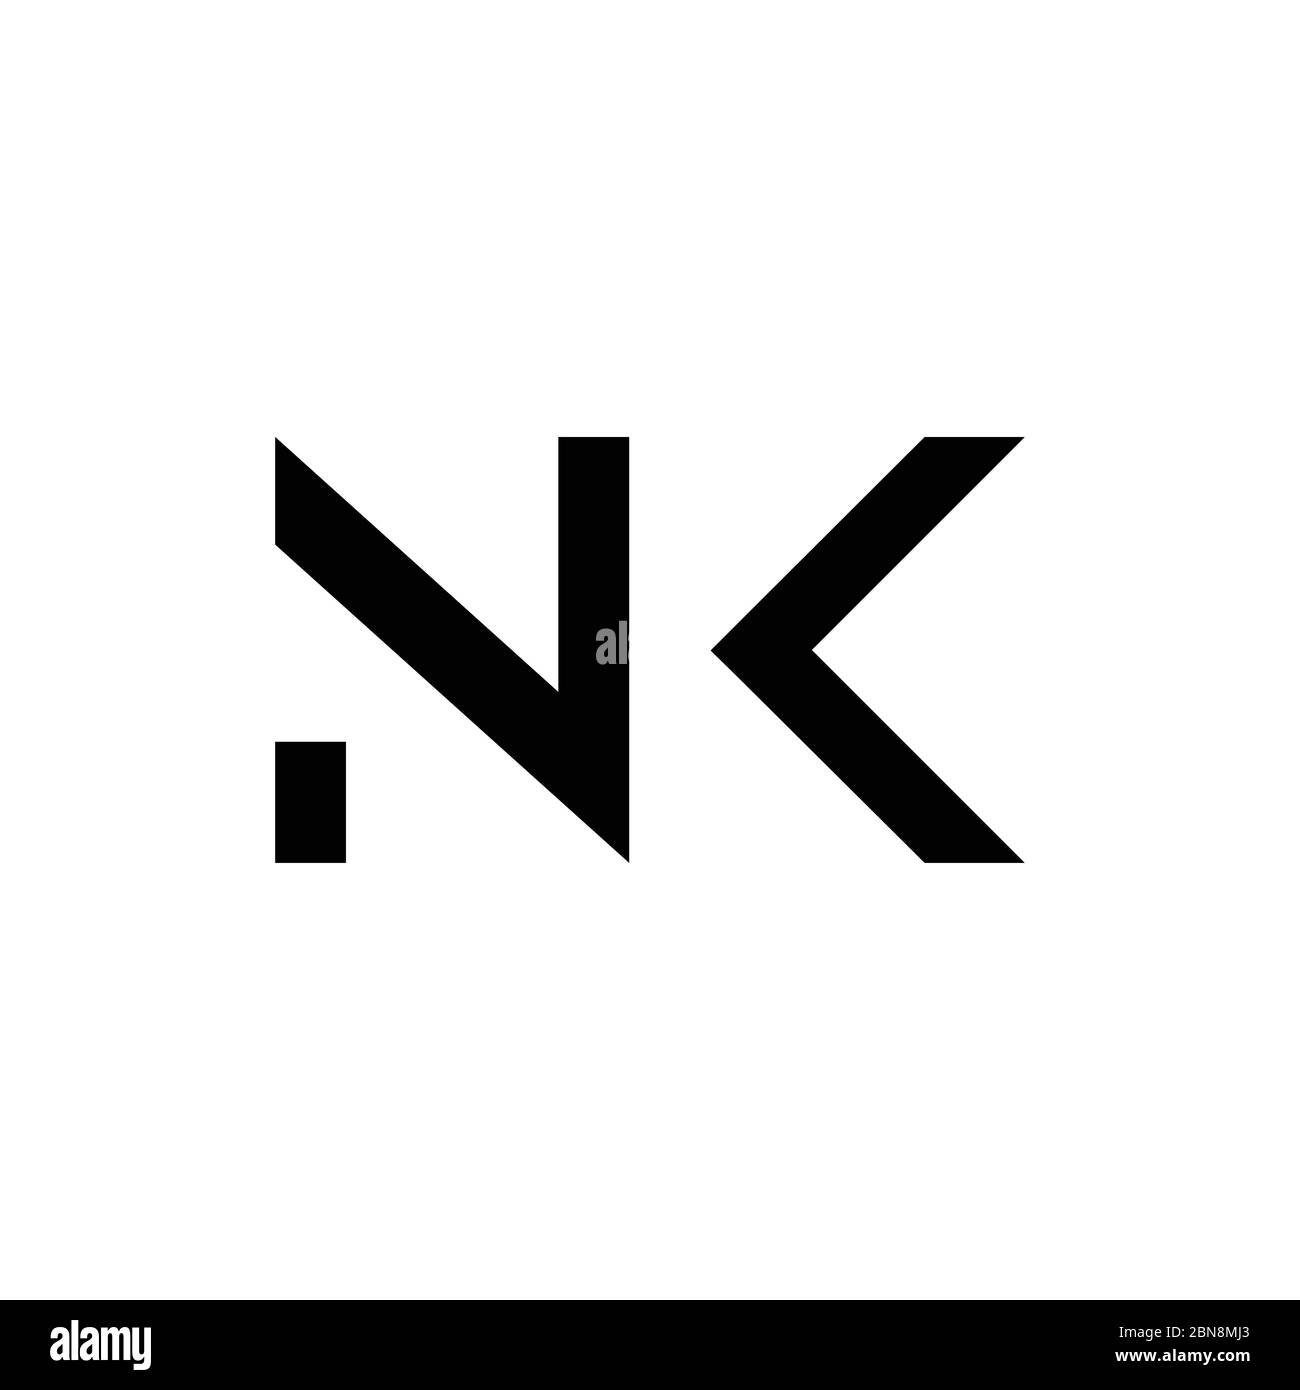 nk or n, k Lowercase Cursive Letter Initial Logo Design, Vector Template  Stock-Vektorgrafik